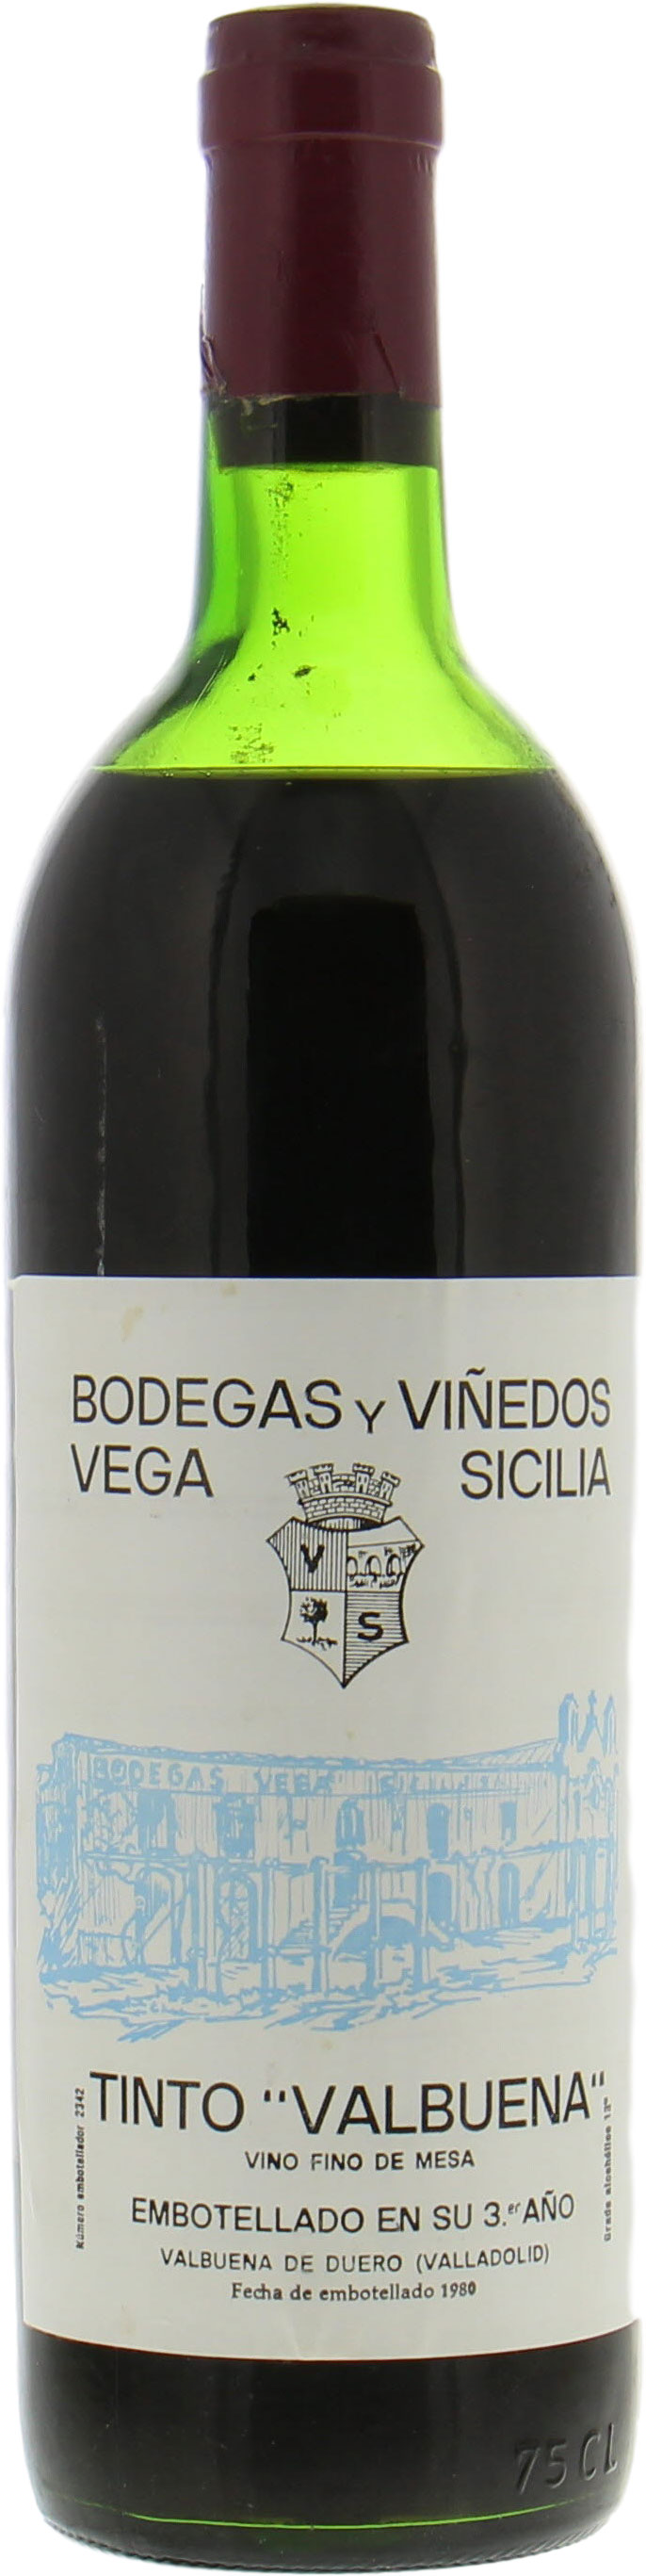 Vega Sicilia - Valbuena 1980 Mid shoulder